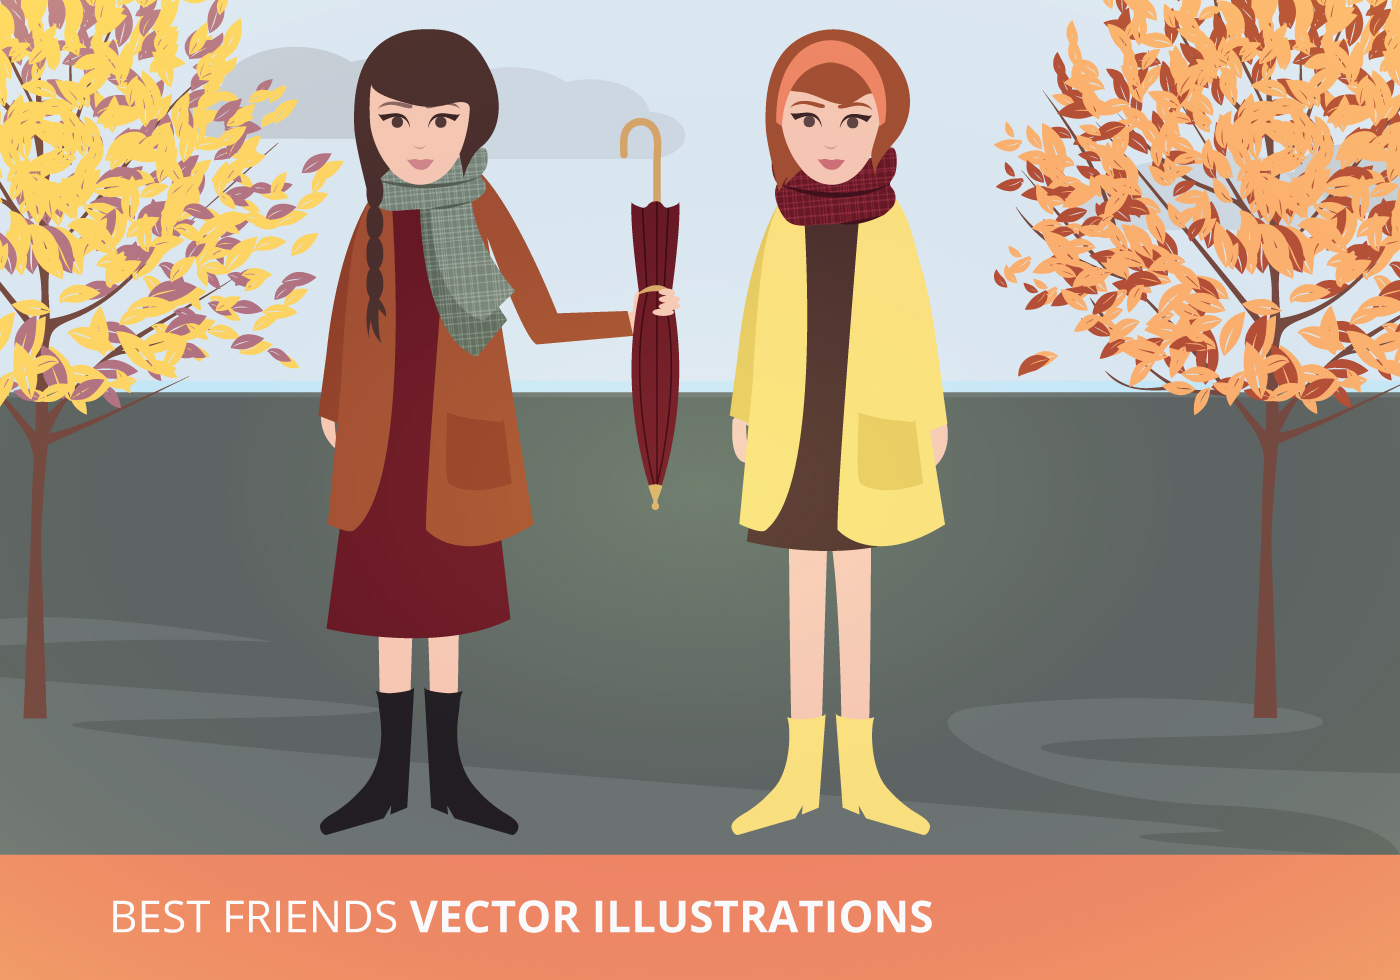 Download Best Friends Vector Illustration 96038 - Download Free Vectors, Clipart Graphics & Vector Art